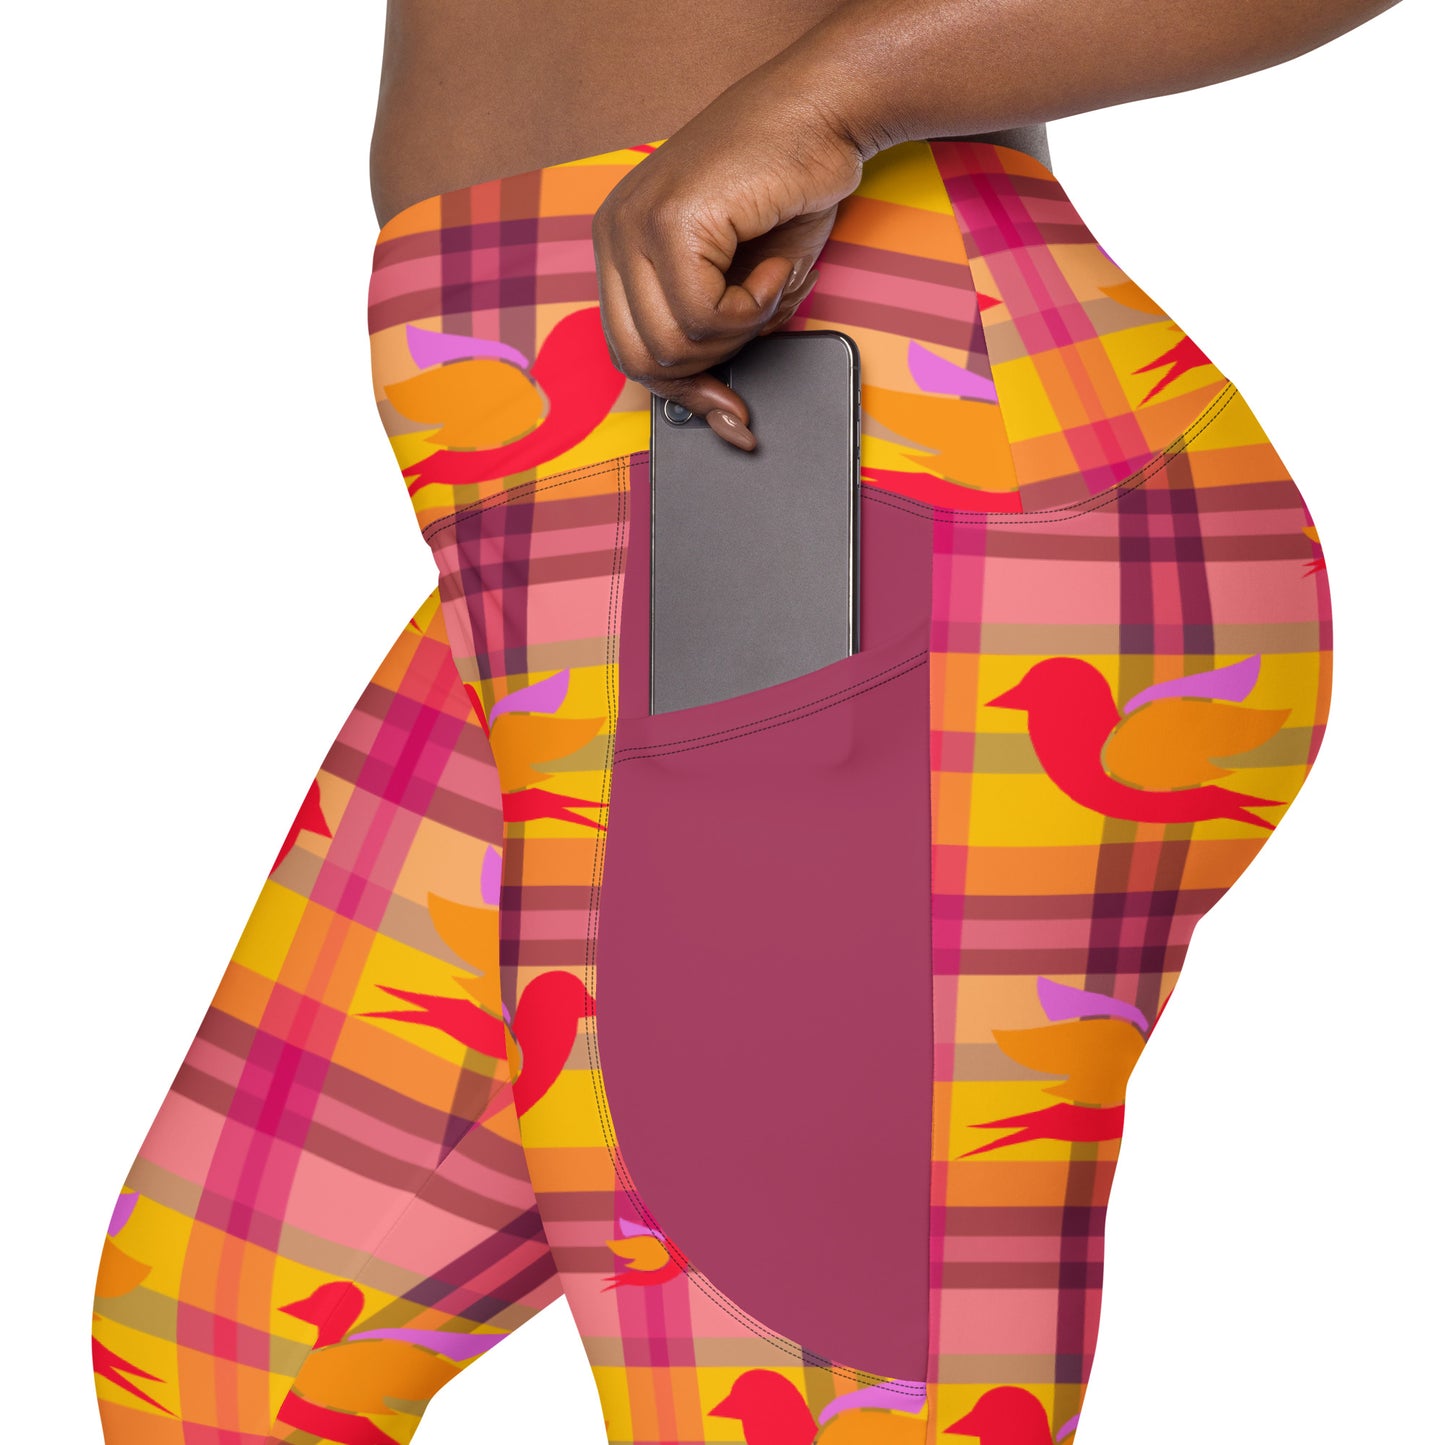 Txoriak High Waist 7/8 Length Recycled Yoga Leggings / Yoga Pants with Pockets